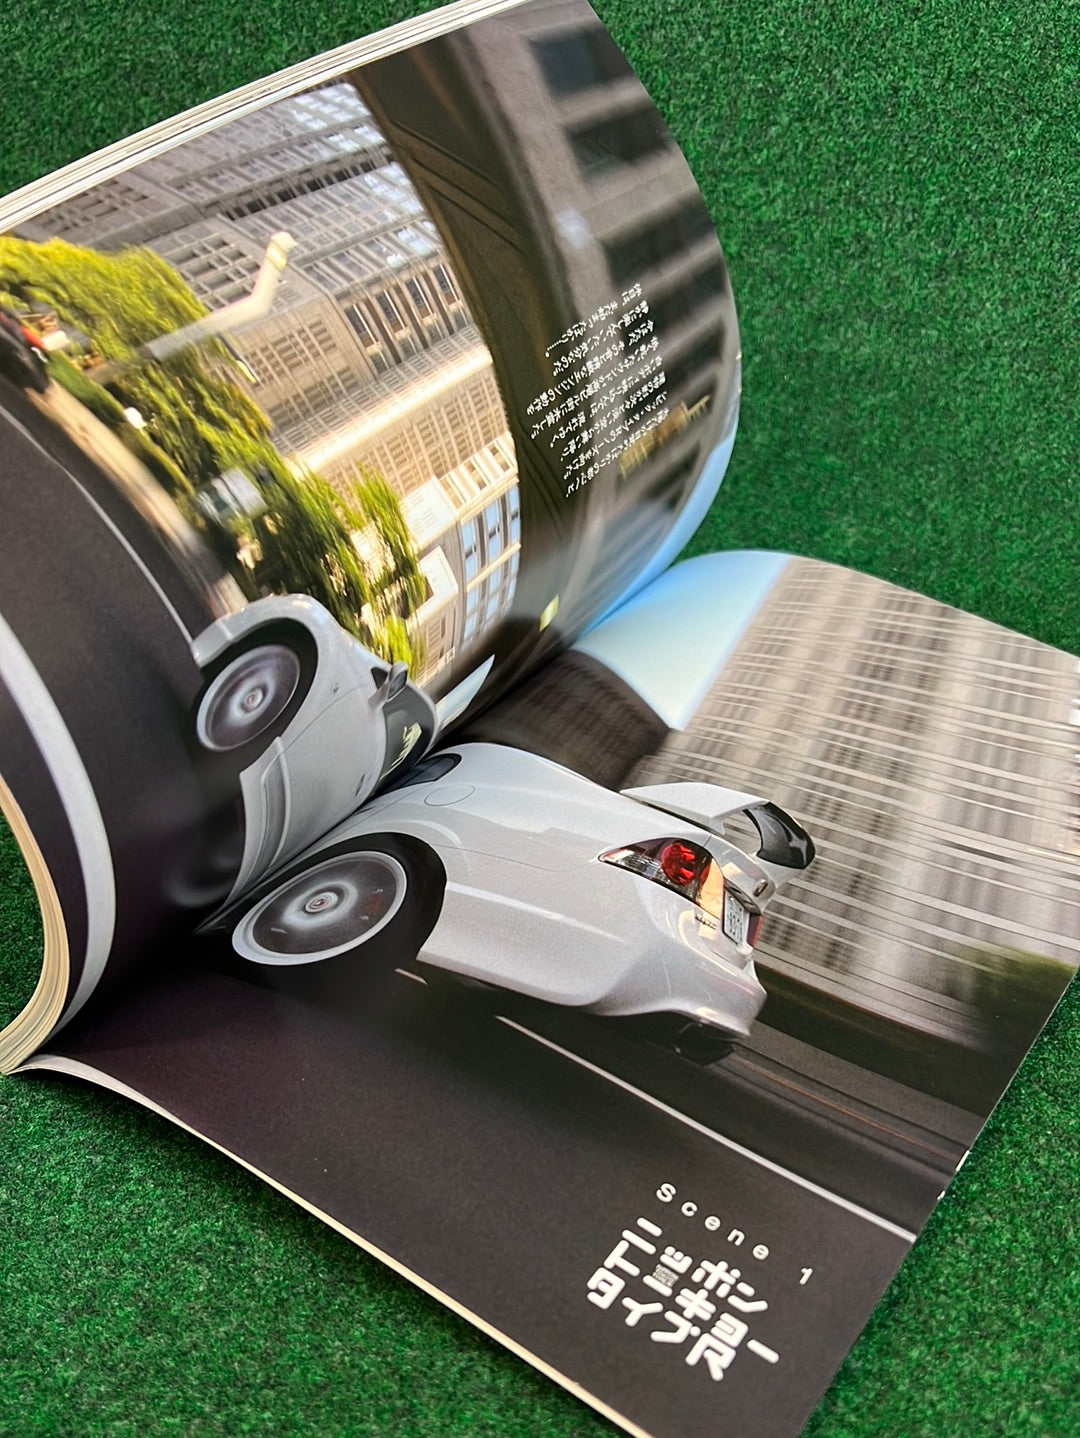 MotorFan & XaCAR Honda Civic Type R FD2 Special Issue Magazine